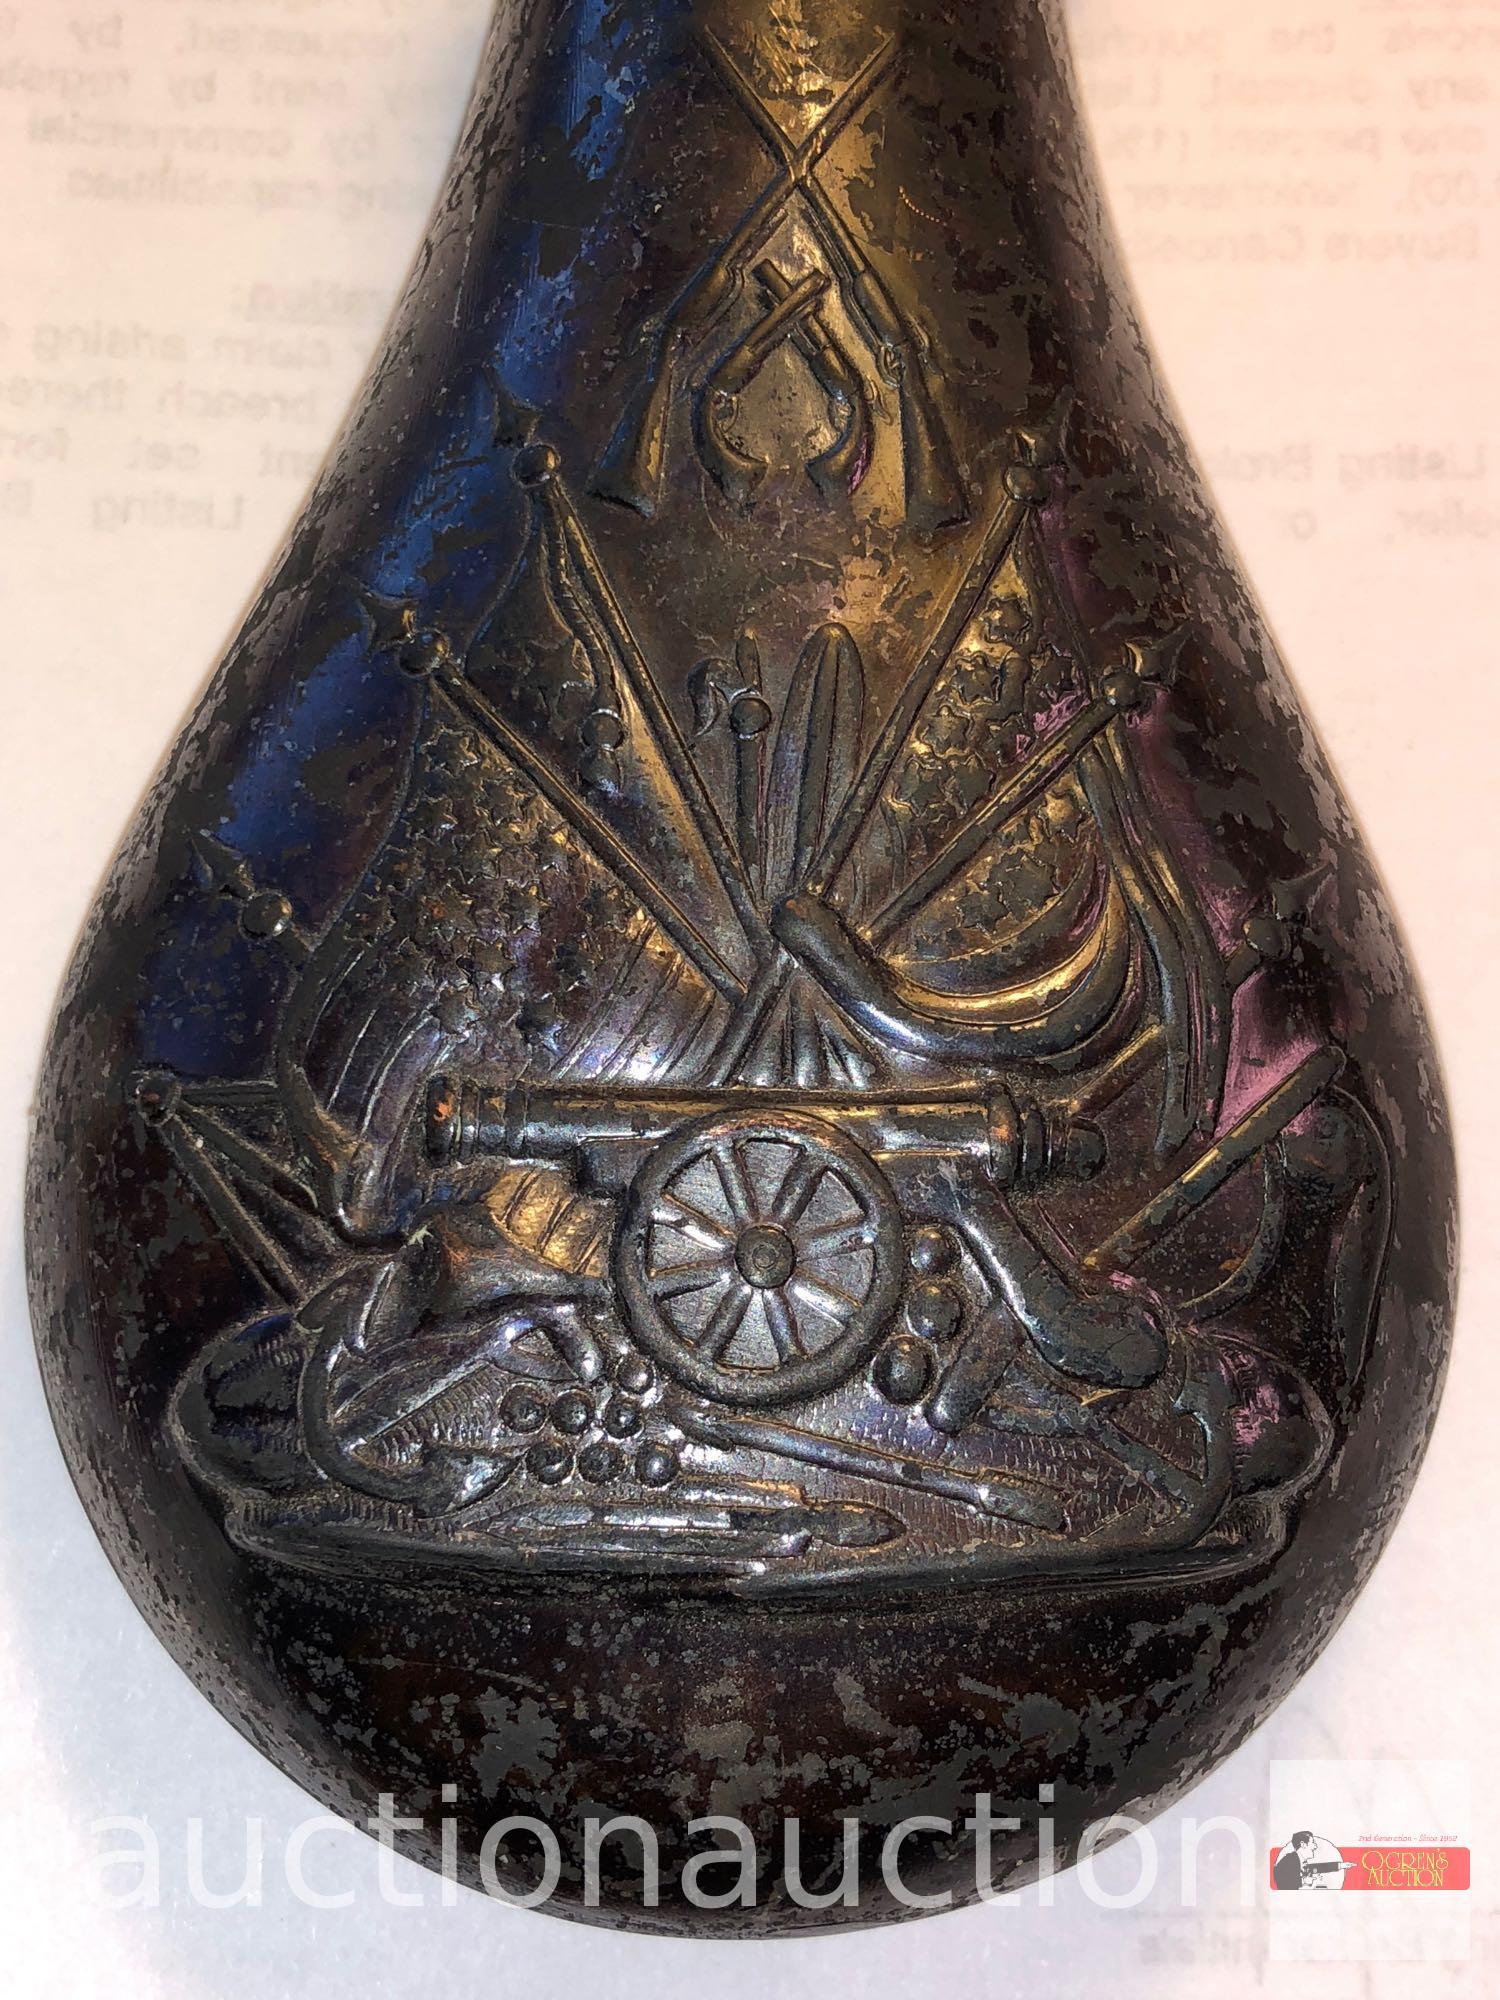 Powder horn - vintage ornate metal powder horn, Made in USA